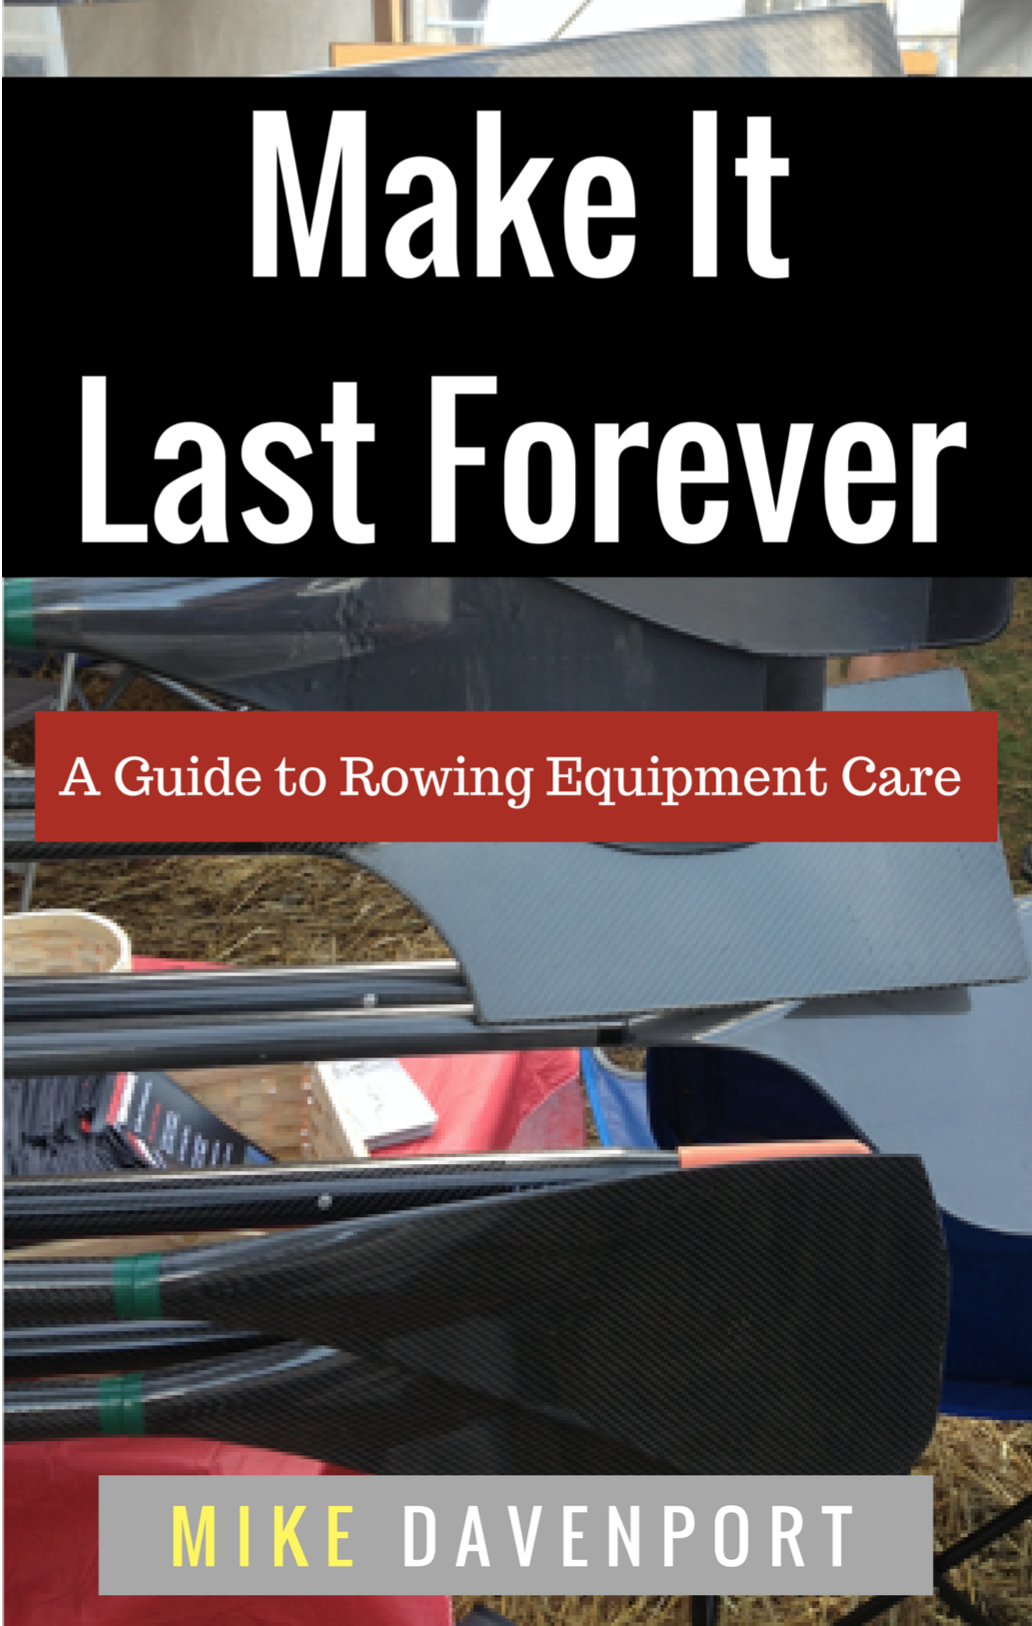 Last forever ebook, rowing equipment, rowing boat repair, Mike Davenport